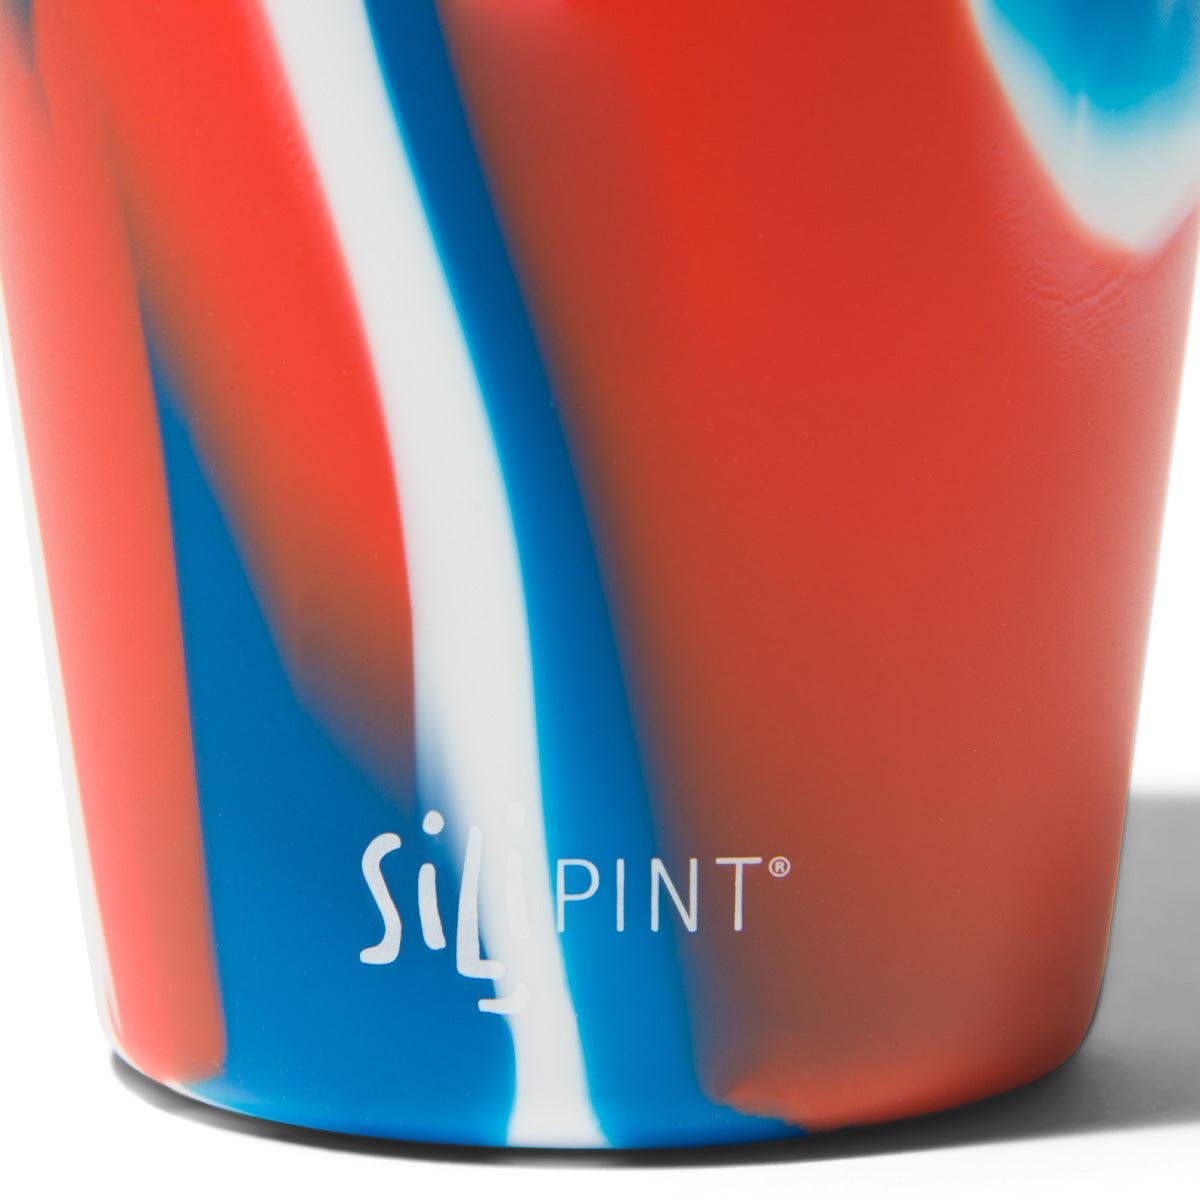 Silipint 791524 Pint Icicle Glass